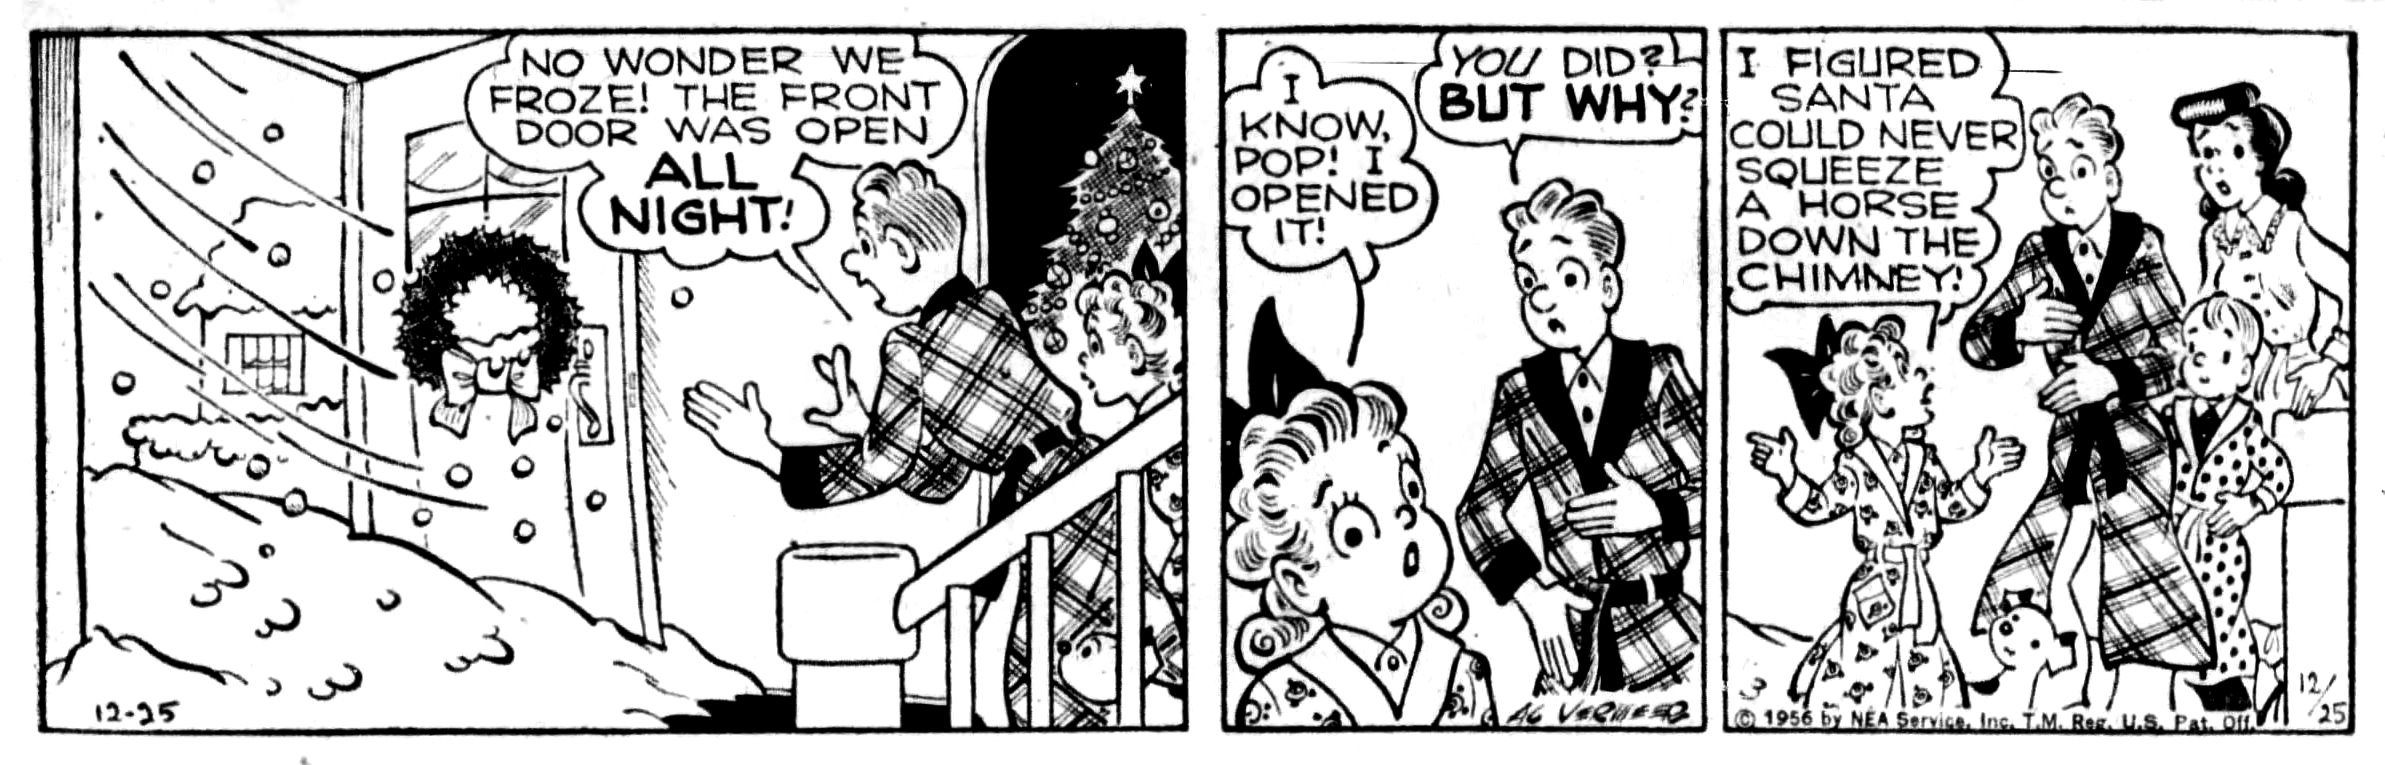 Priscilla's Pop, December 25, 1956